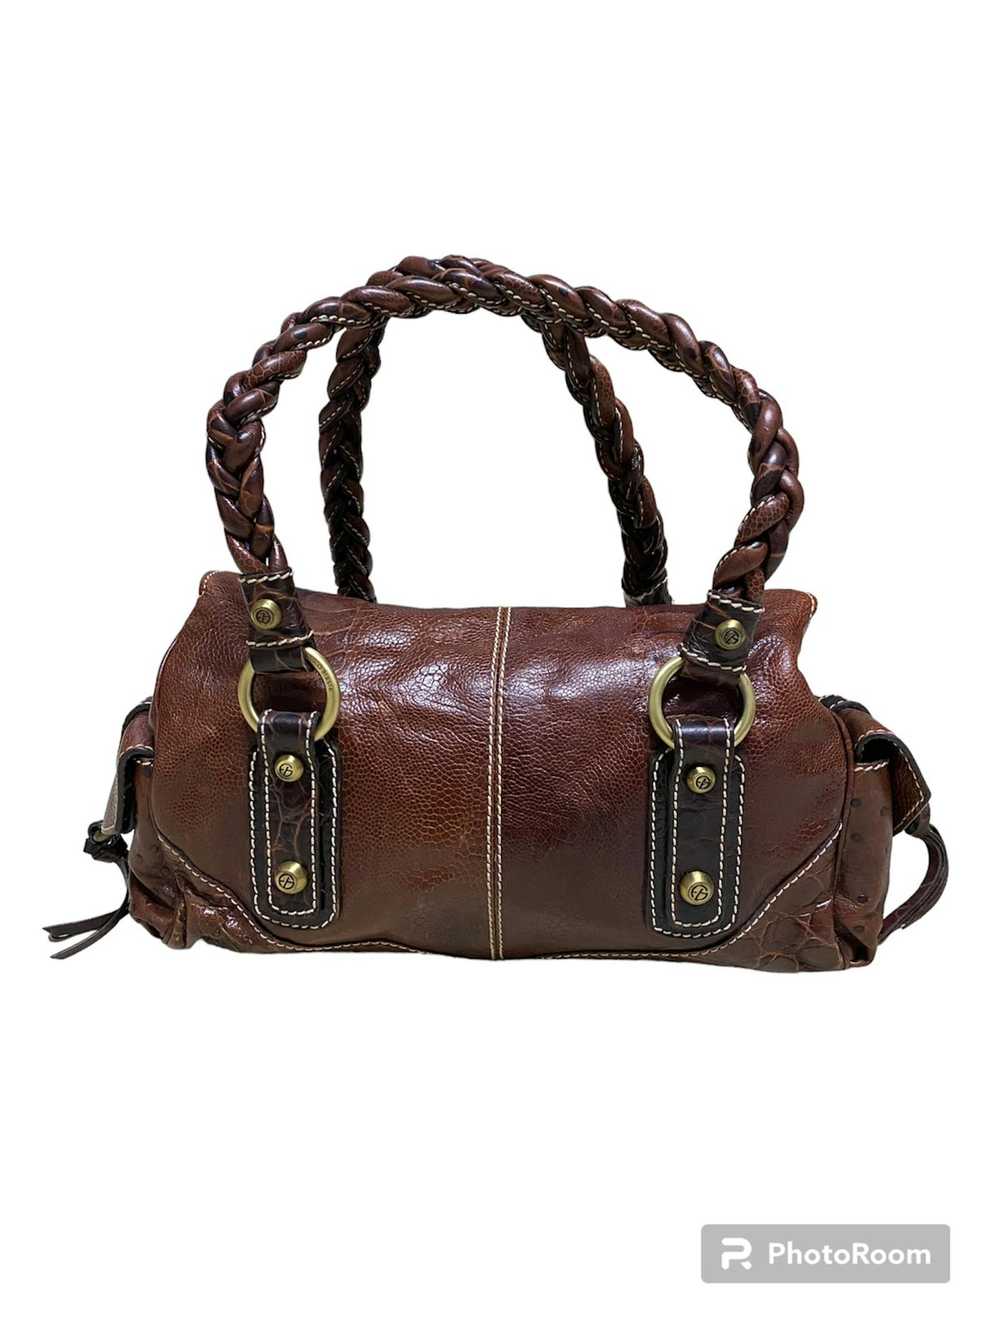 Leather × Vintage Francesco Biasia women’s handbag - image 2